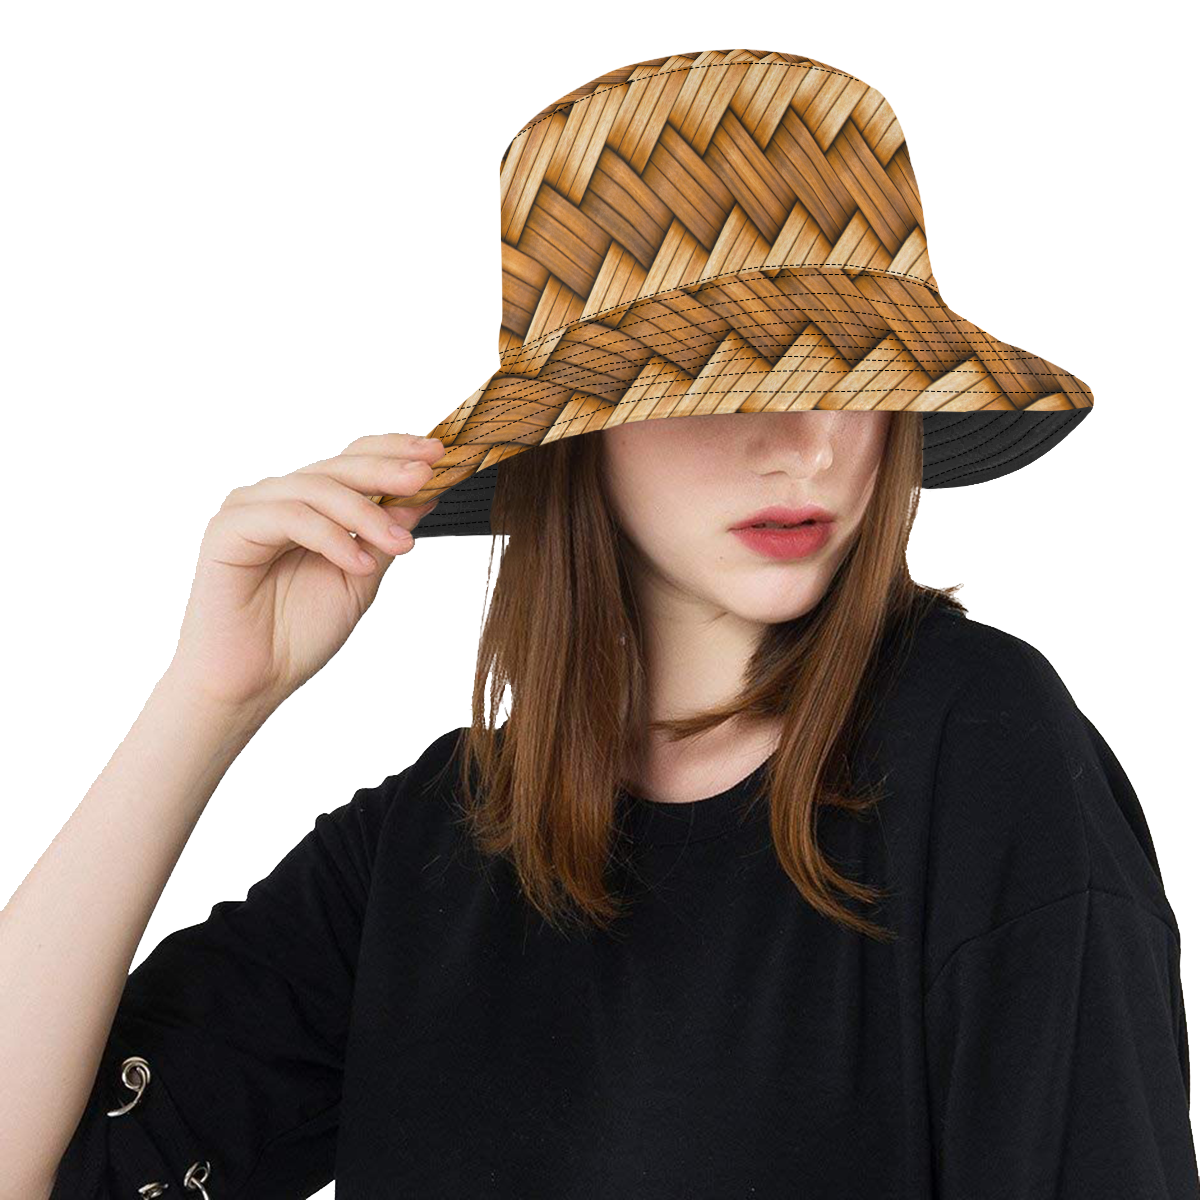 Golden Basket Weave All Over Print Bucket Hat